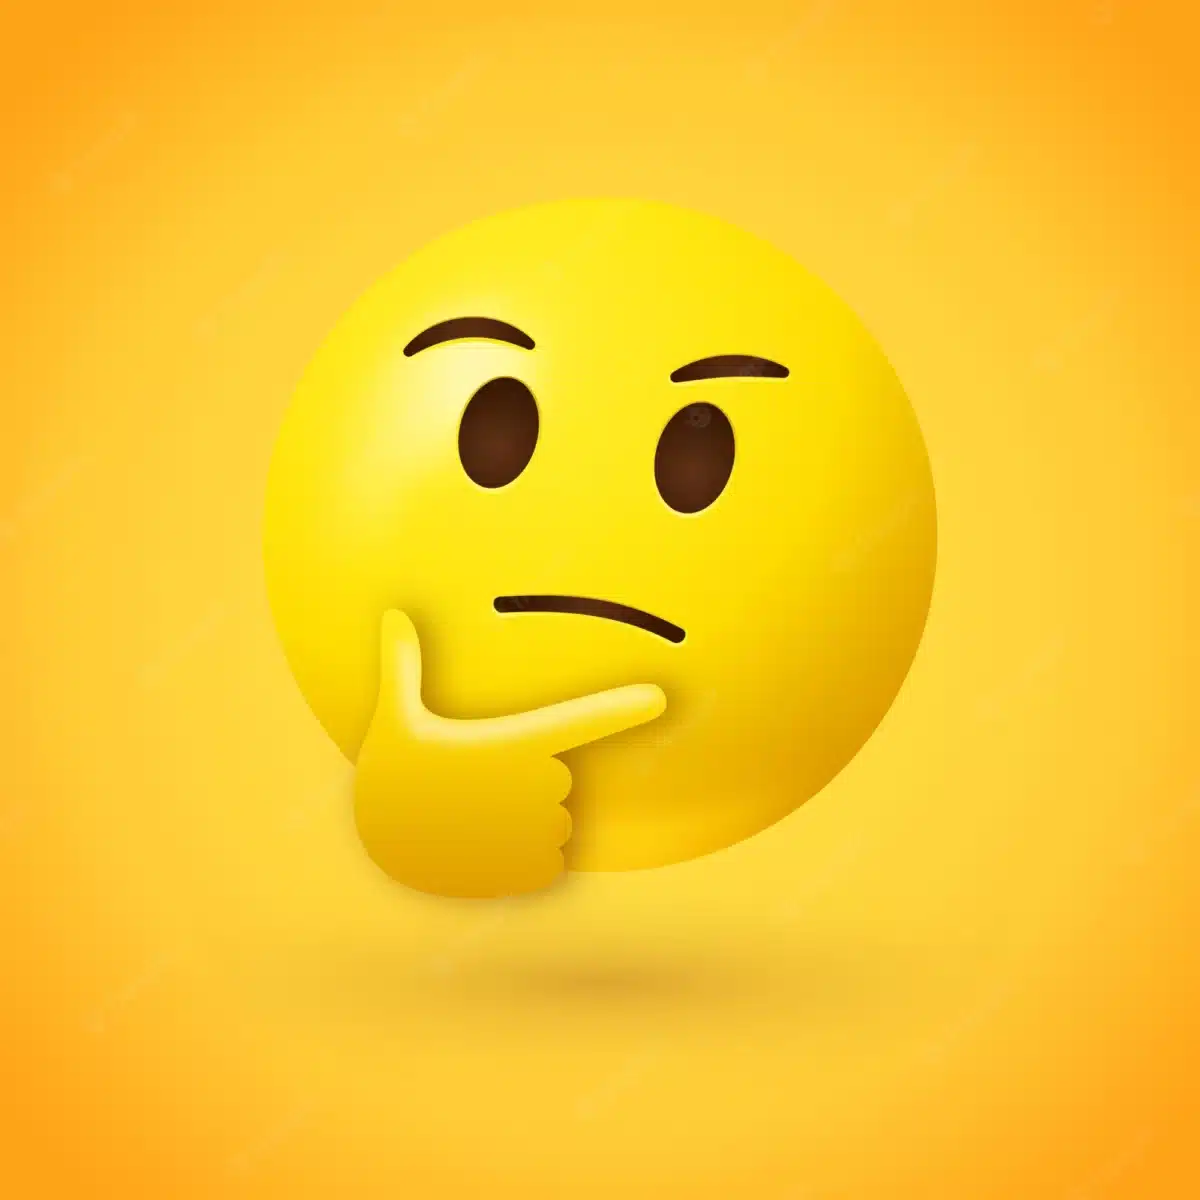 pensive emoji